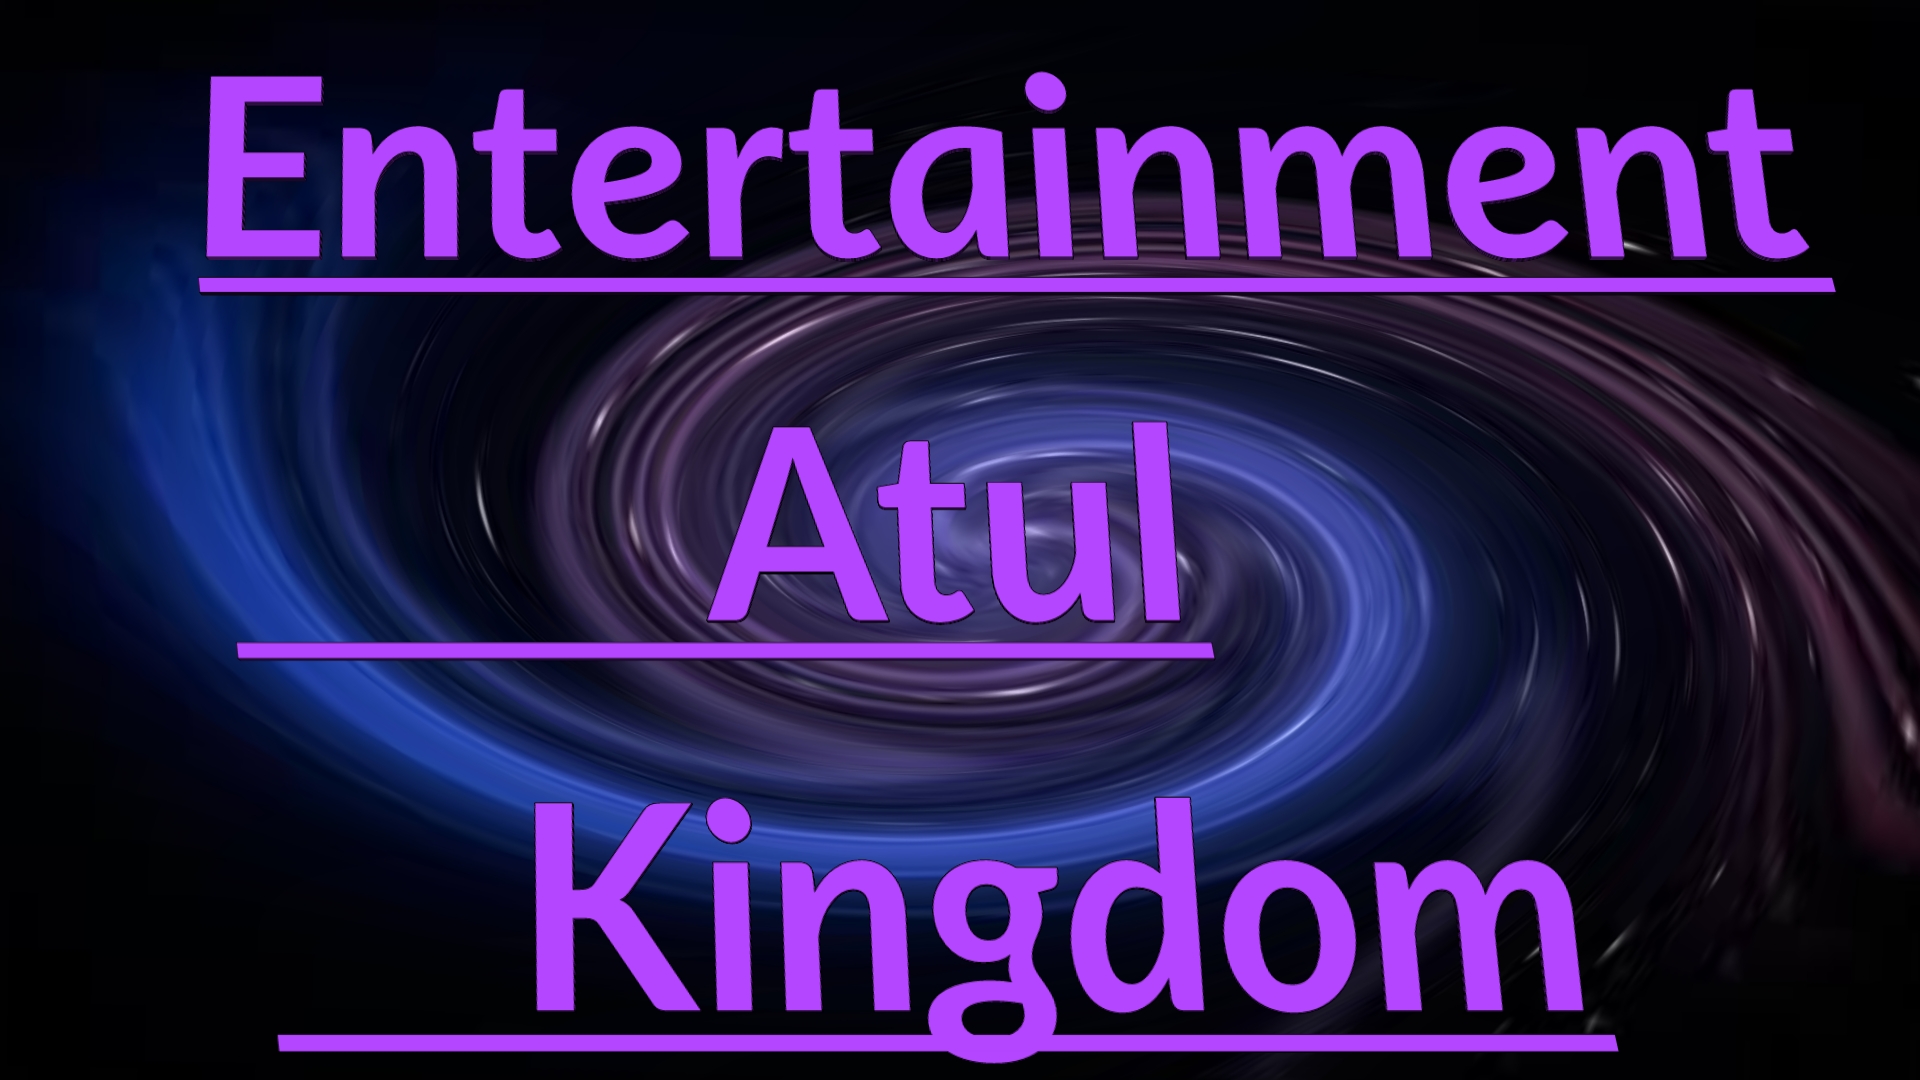 Atul kingdom